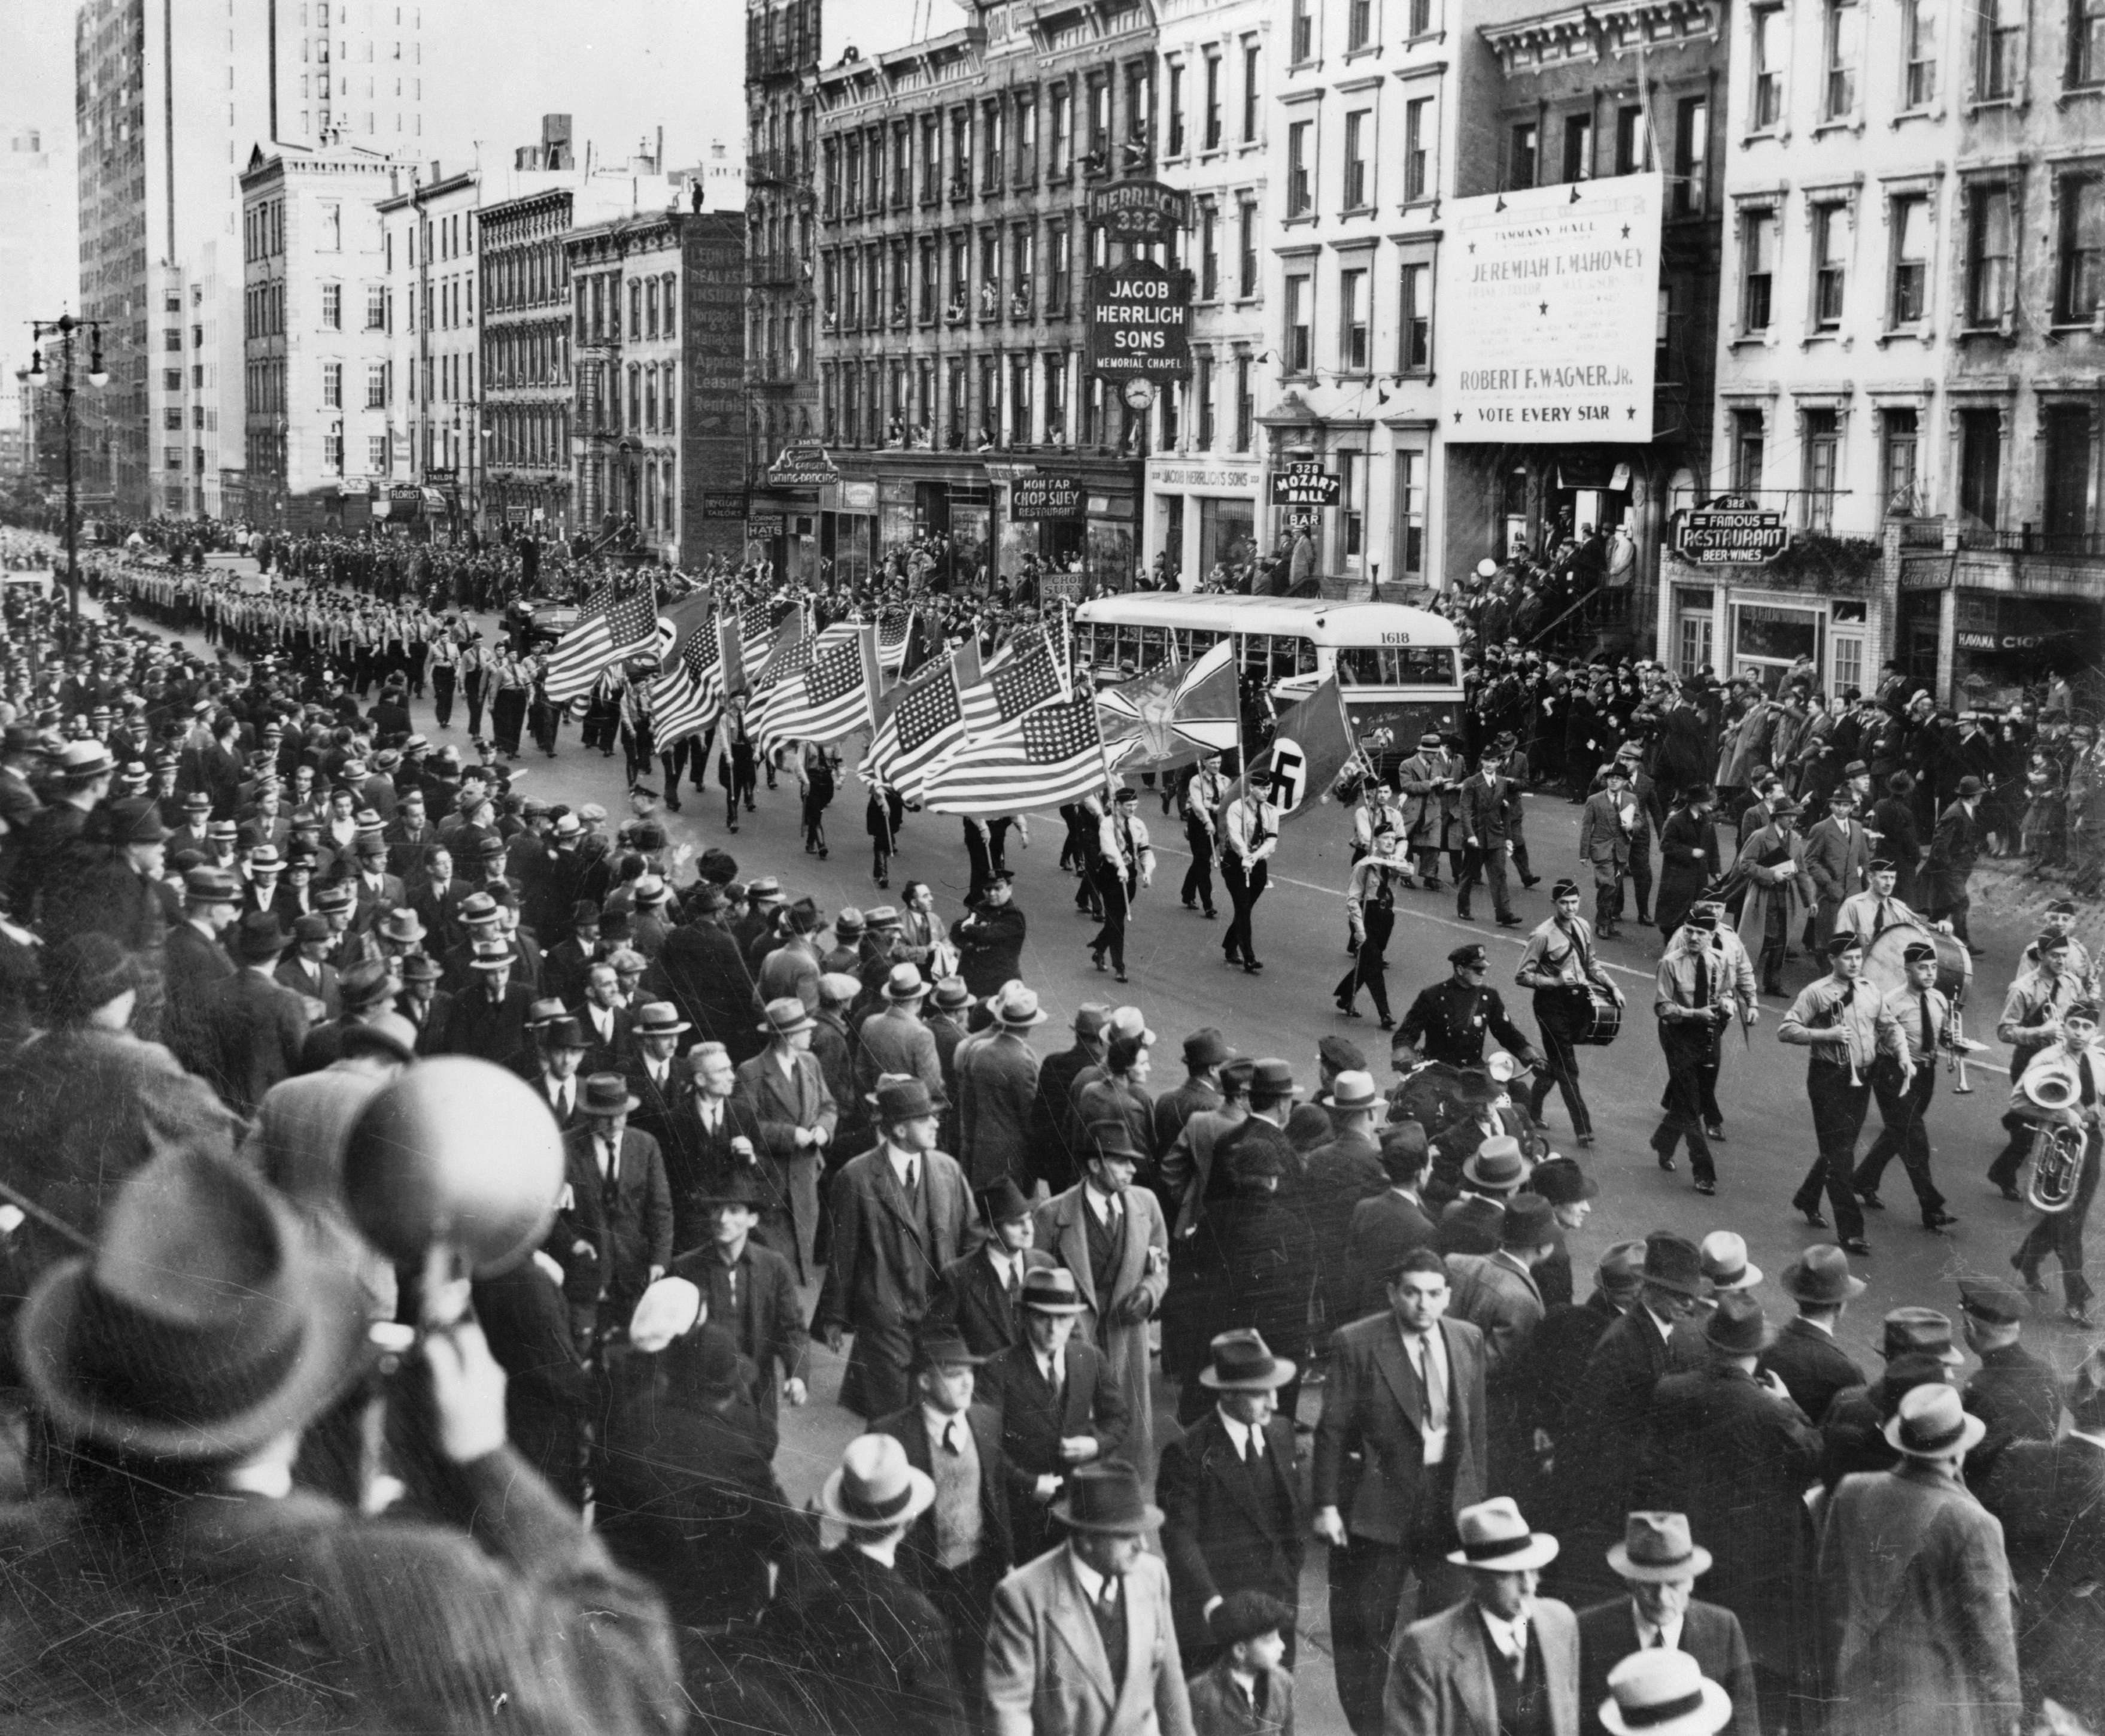 German American Bund parade on East 86th Street, New York, New York, United States, 30 Oct 1939